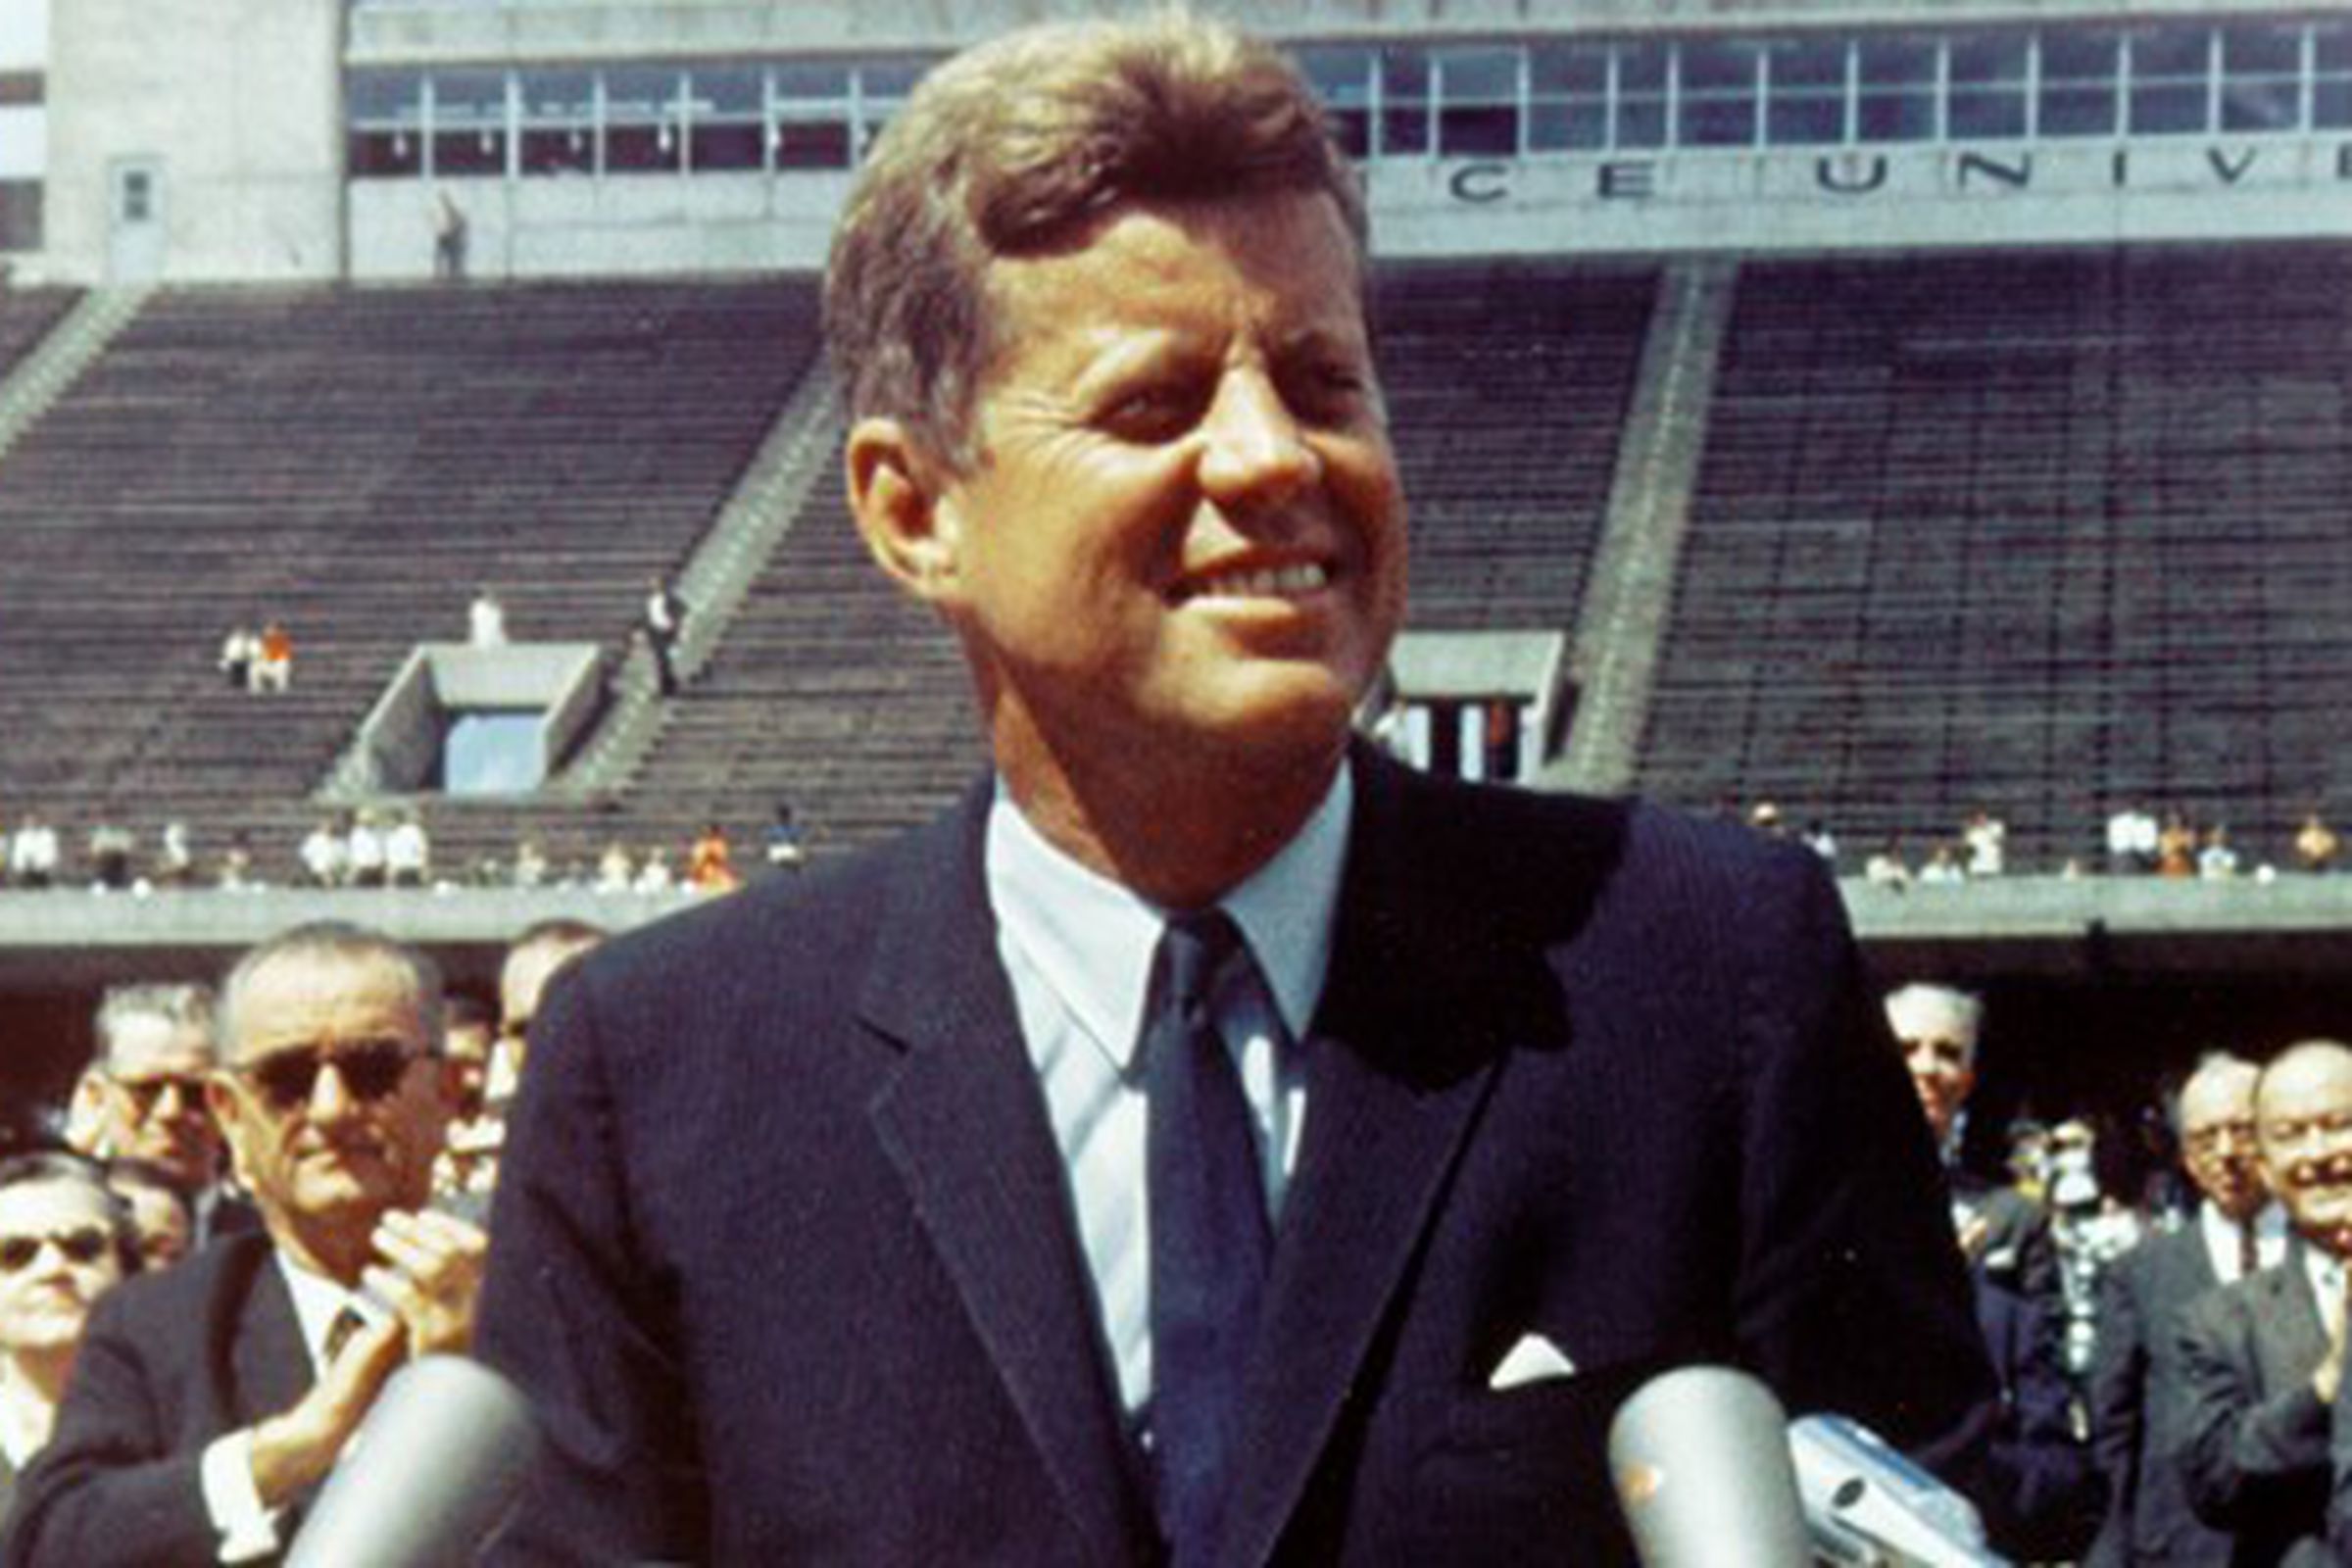 JFK delivering moon speech, 1962